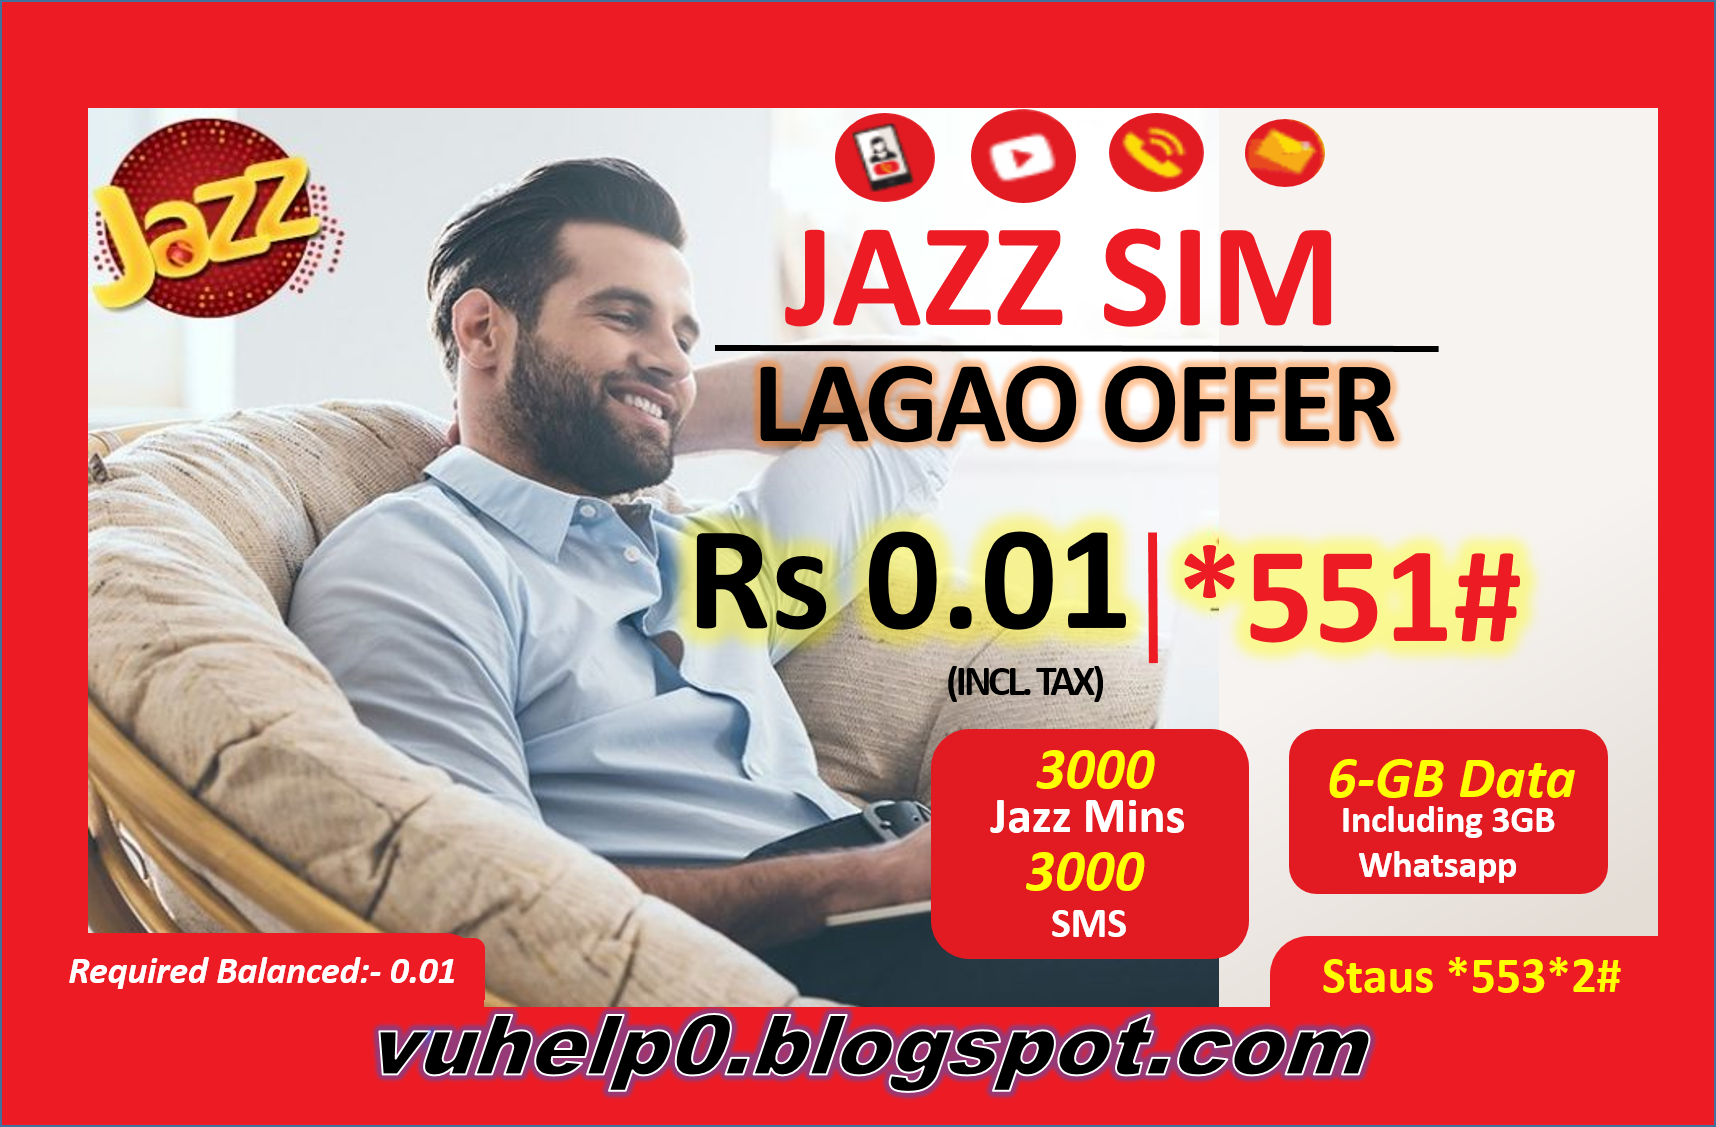 Jazz Sim Lagao Offer | Jazz *551# Offer